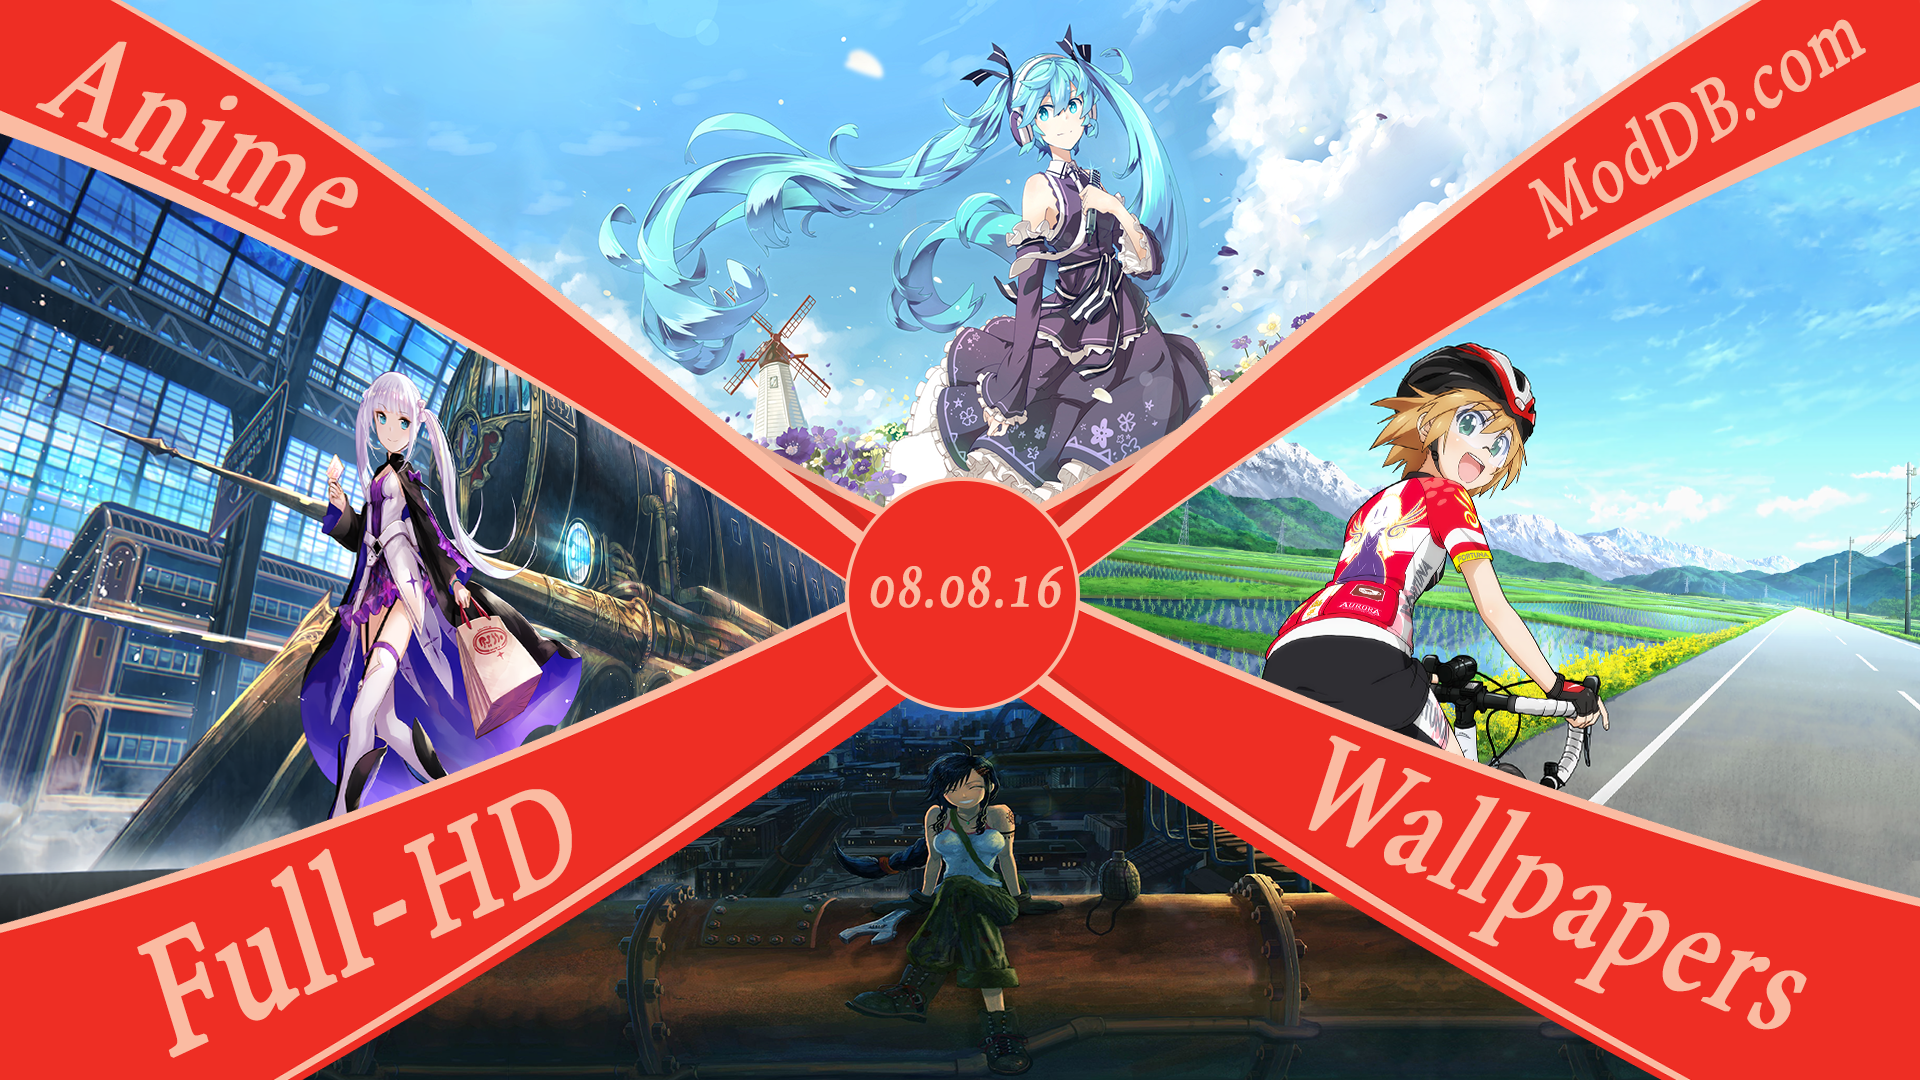 Old Anime Wallpaper's (Full-HD) - 04.04.15 file - Animes' Heaven - Mod DB